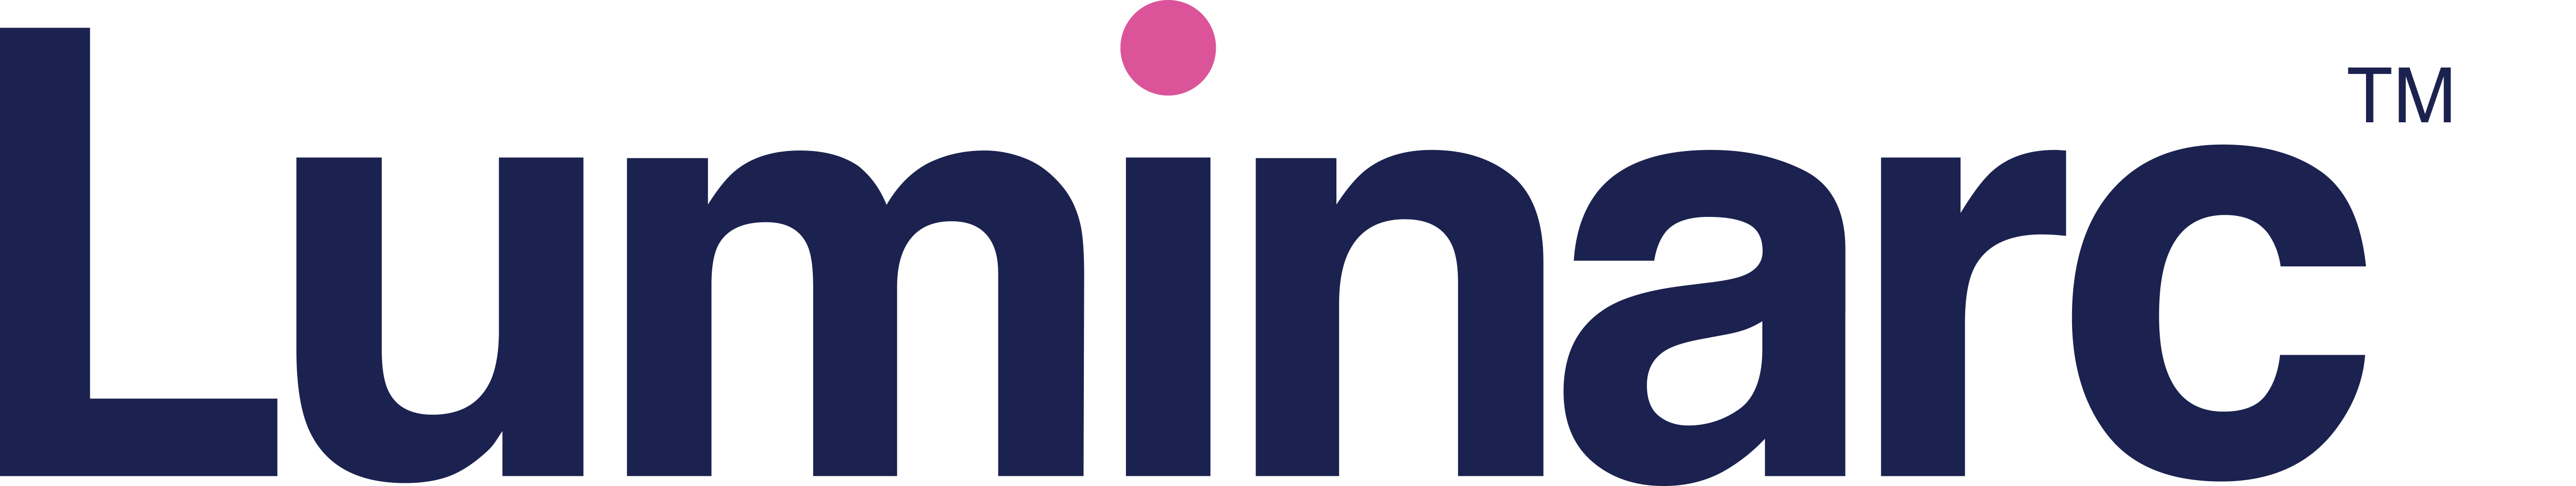 Luminarc Logo with smaller TM